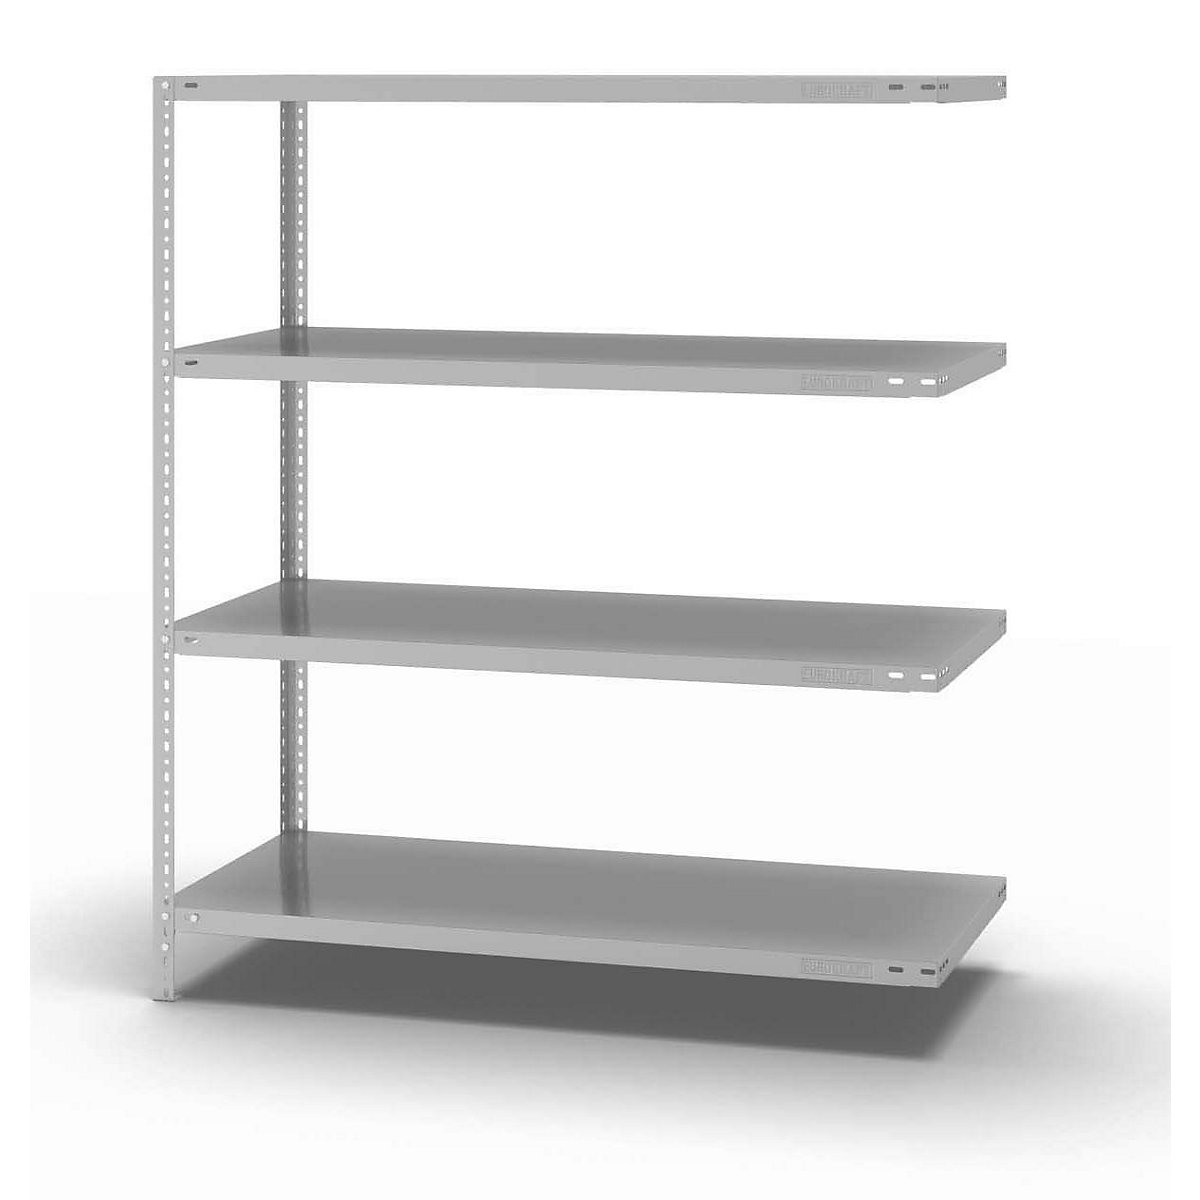 Bolt-together shelf unit, light duty, plastic coated – eurokraft pro, shelf unit height 1500 mm, shelf width 1300 mm, depth 600 mm, extension shelf unit-5